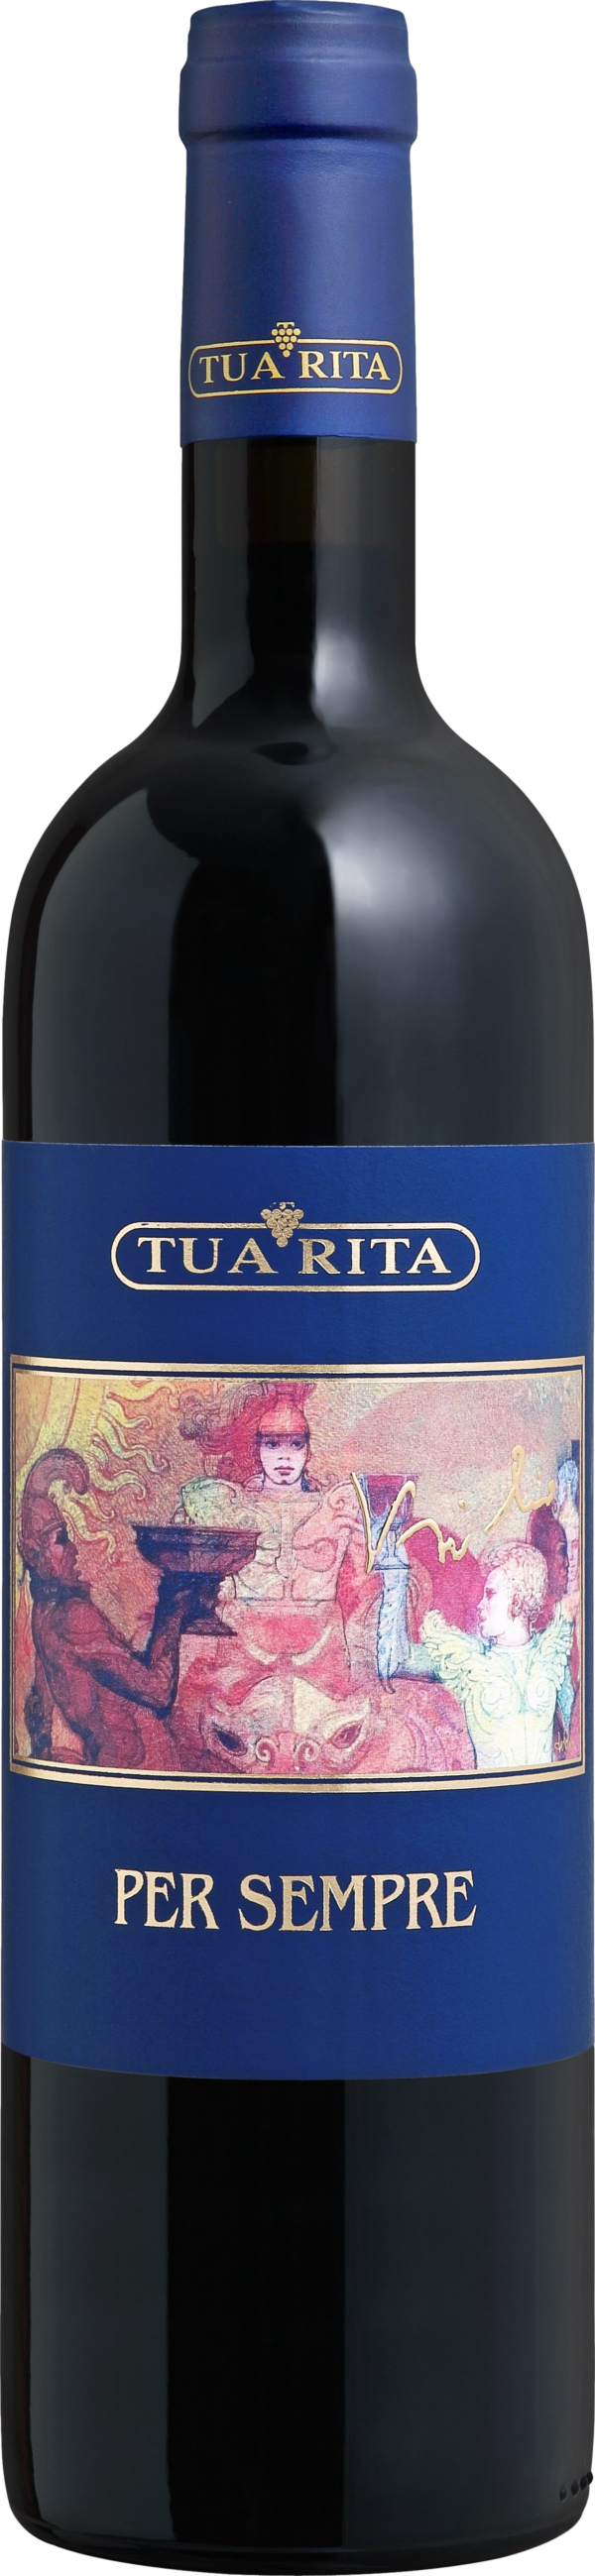 Product image of Tua Rita Per Sempre Syrah 2021 from 8wines